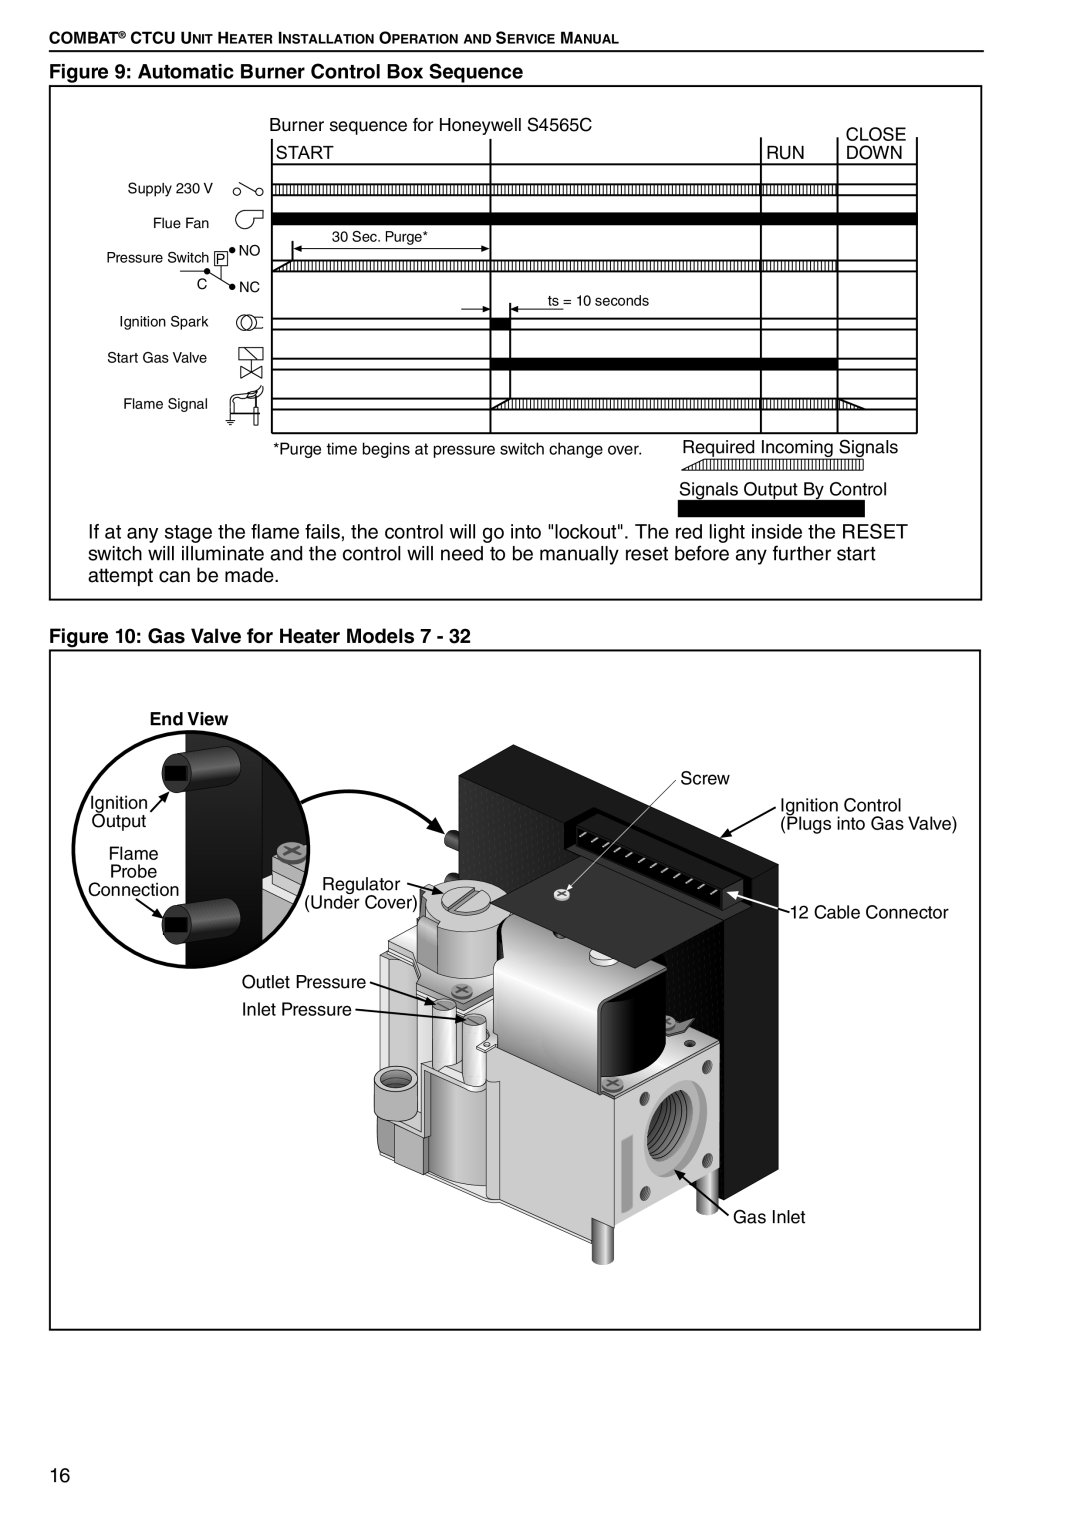 Roberts Gorden CTCU 22, CTCU 27, CTCU 15 Automatic Burner Control Box Sequence, Gas Valve for Heater Models, End View 